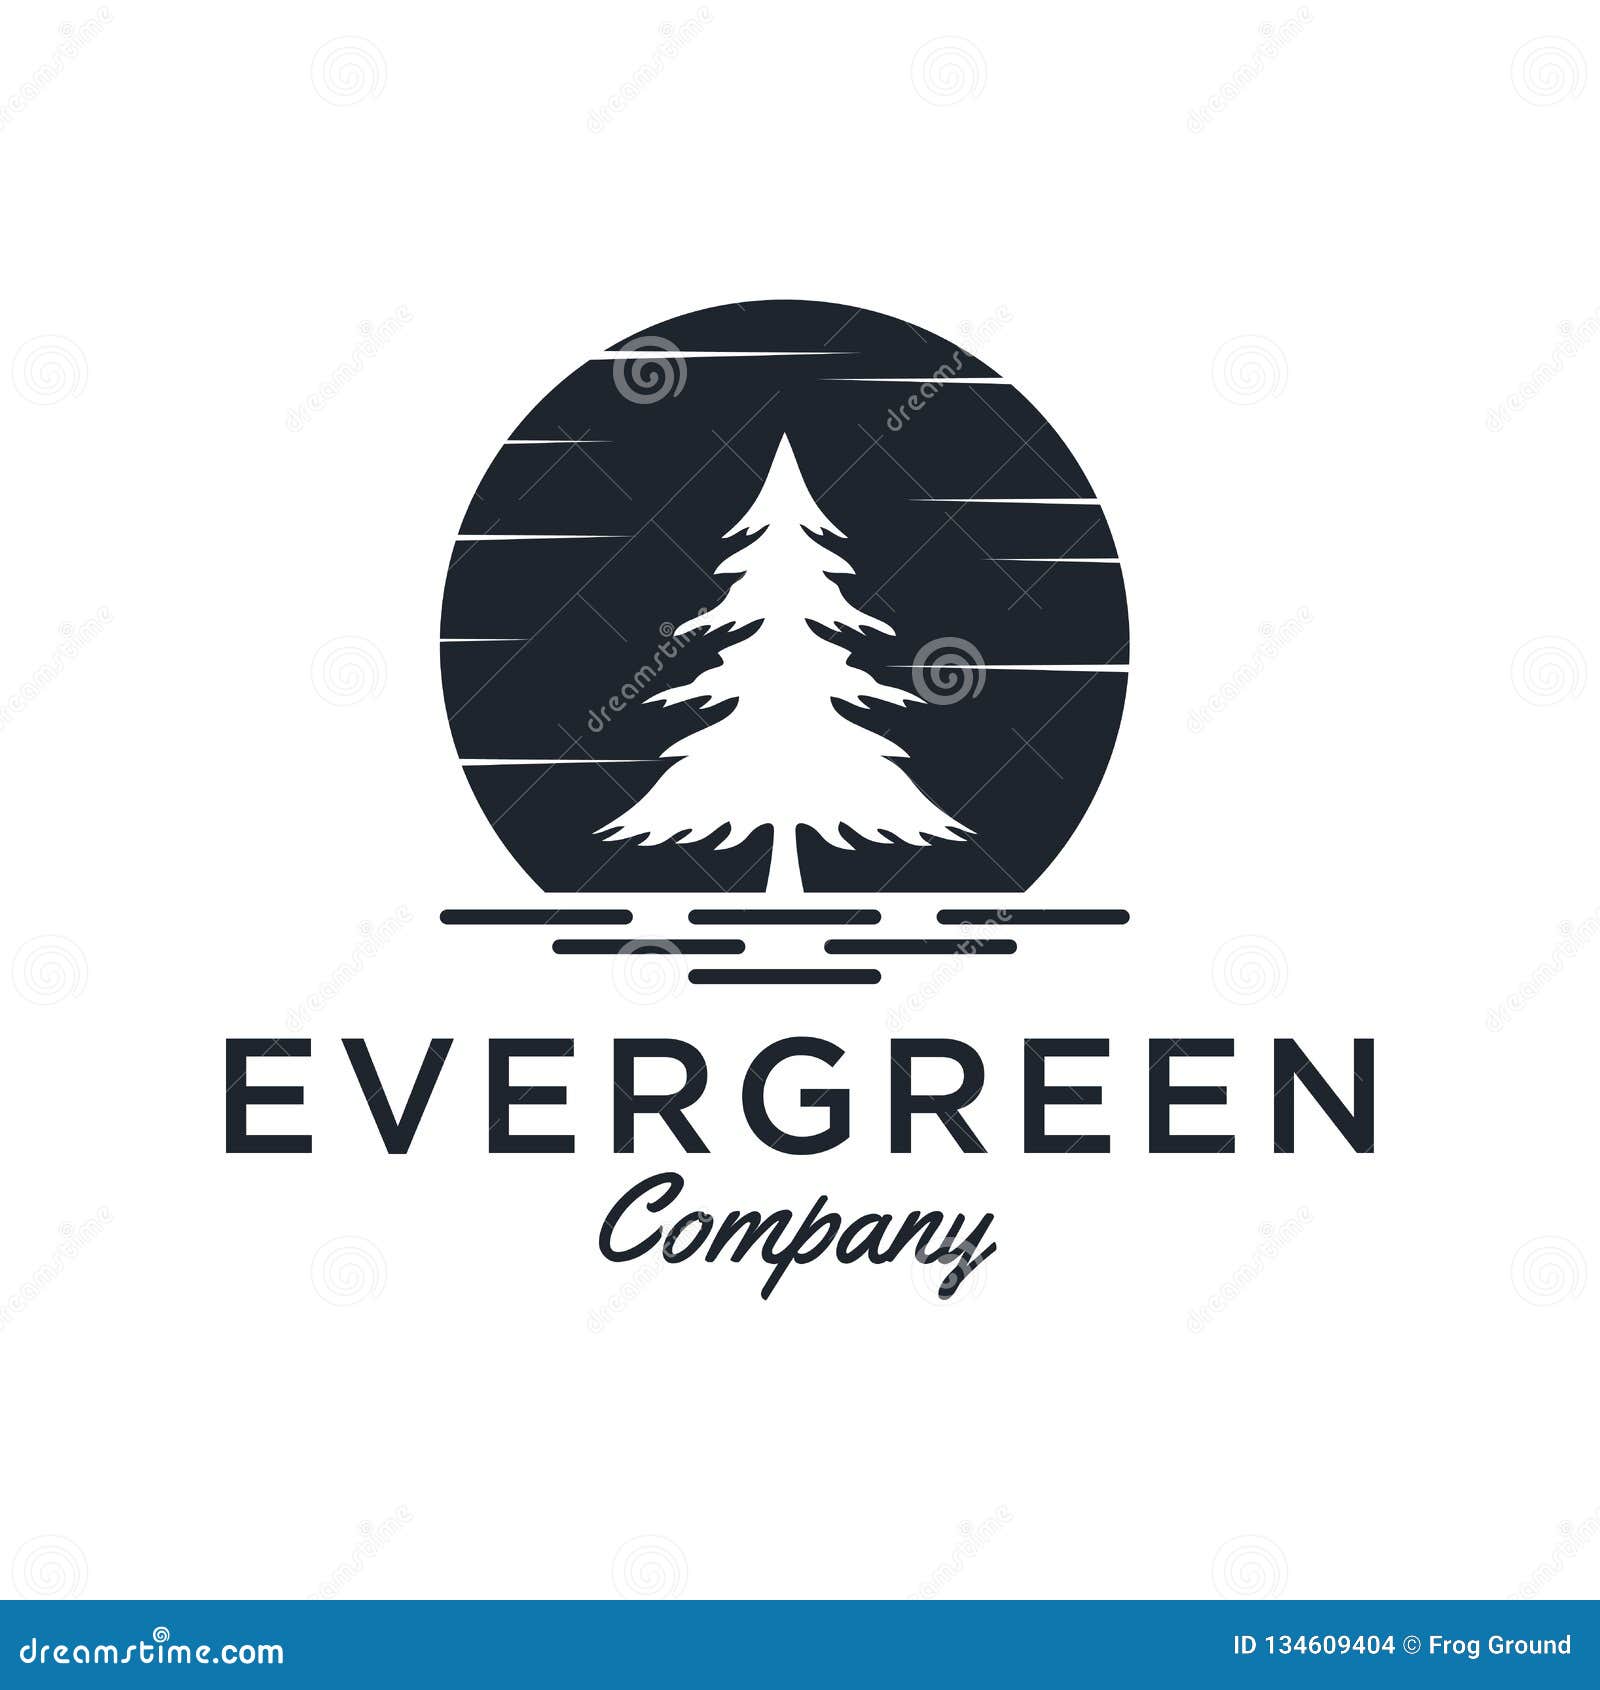 evergreen / pine tree logo  inspiration - 